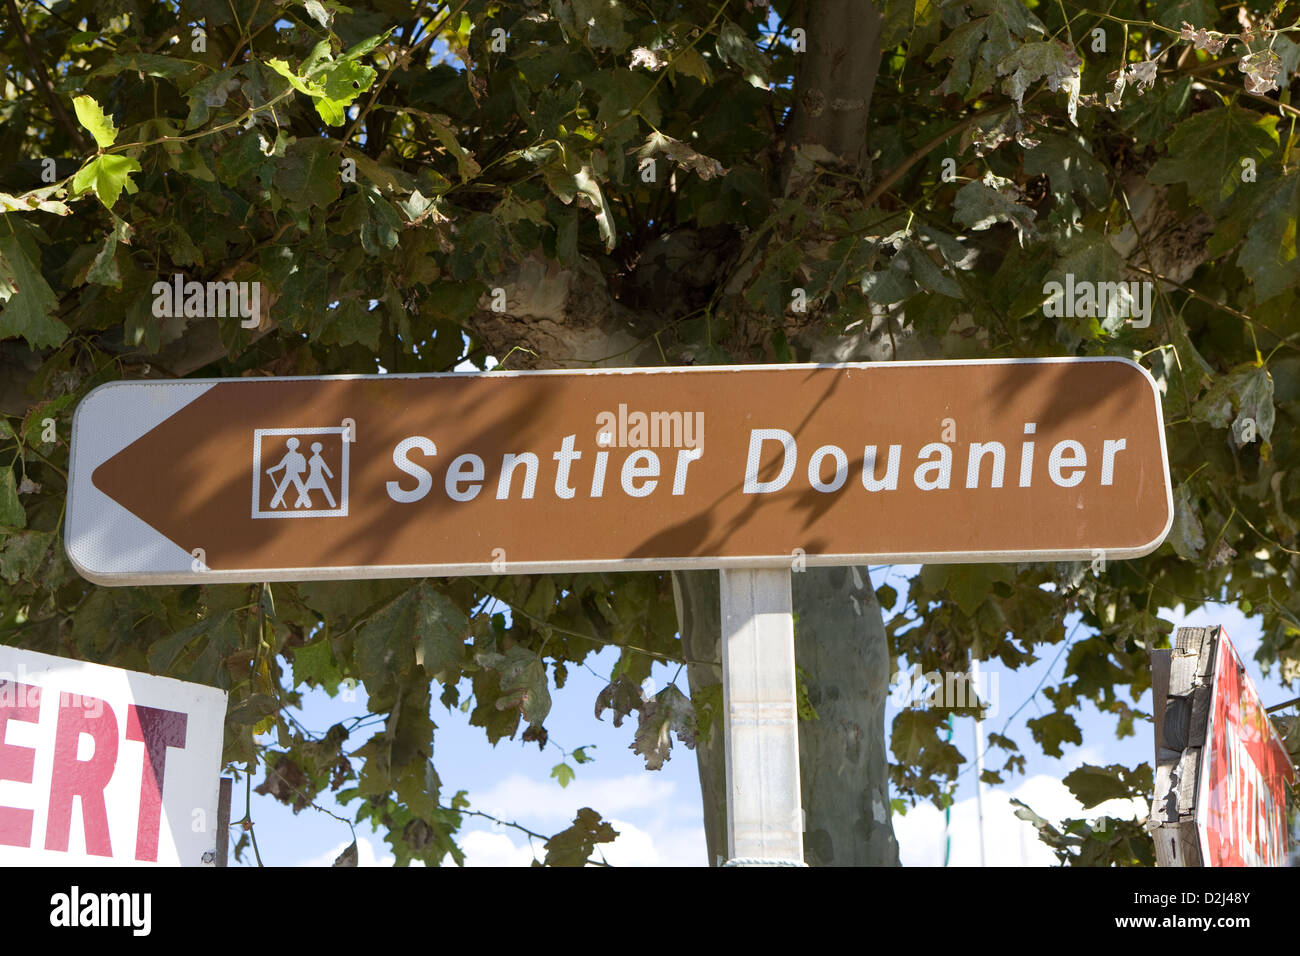 Corsica: Sentier Douanier trail sign Stock Photo